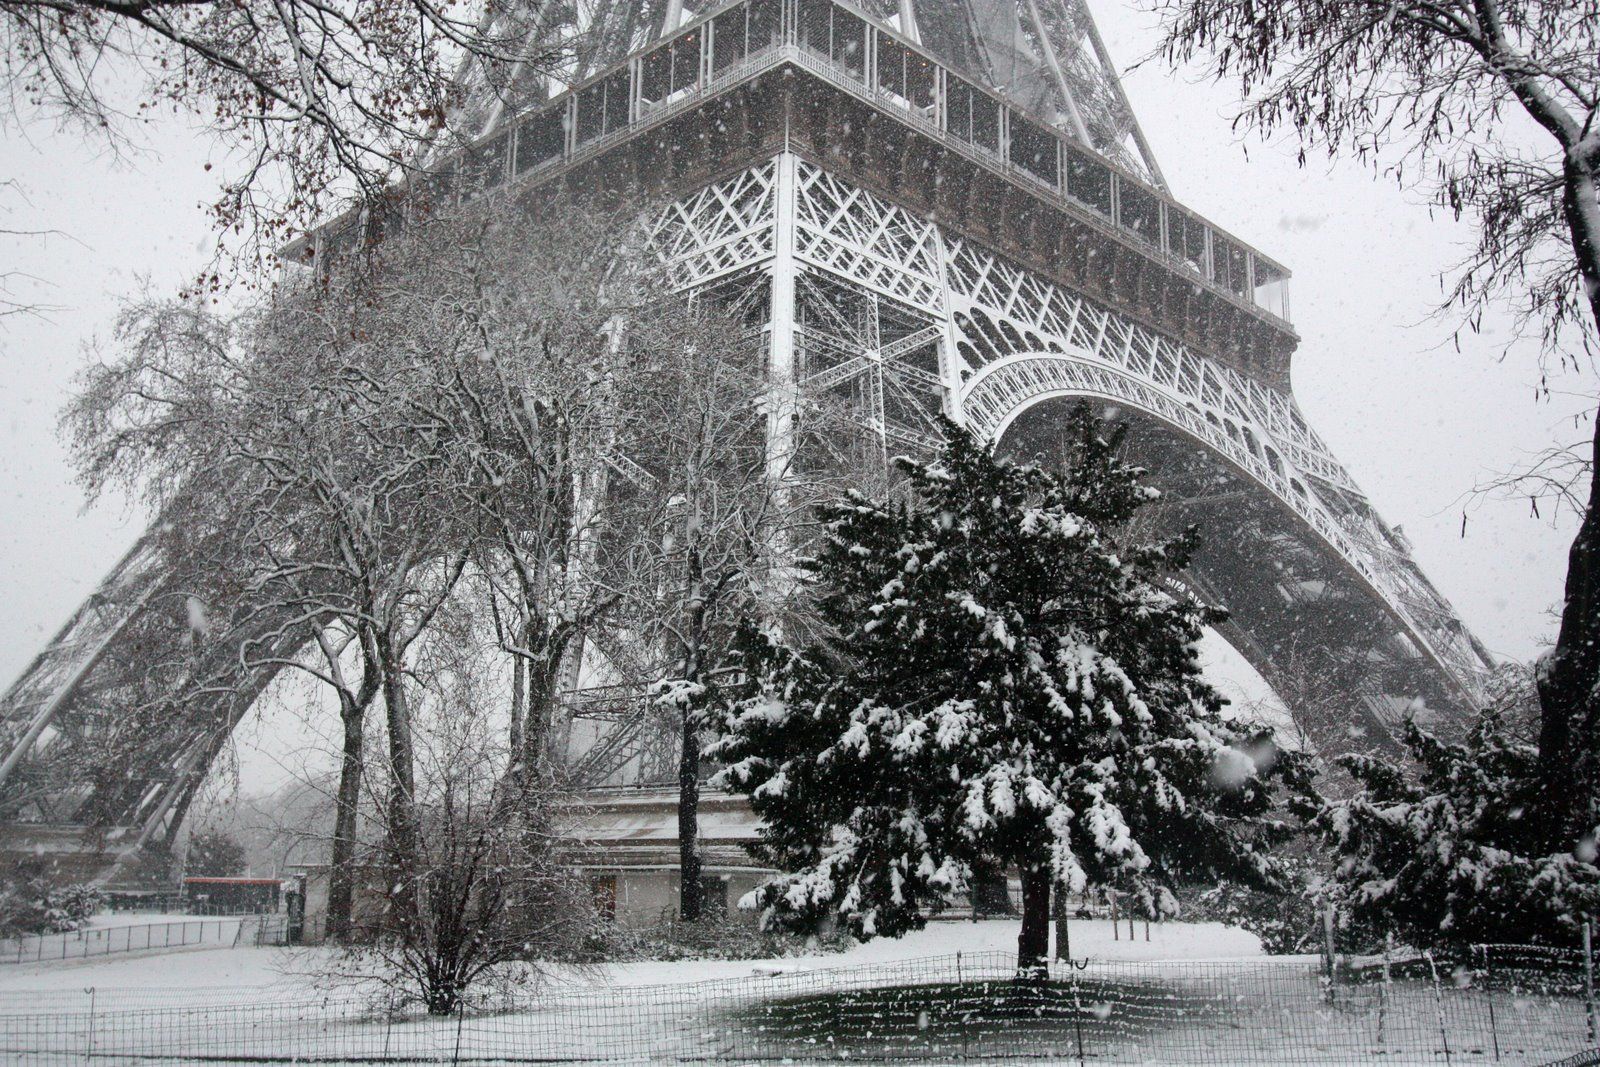 Paris in Winter Wallpaper